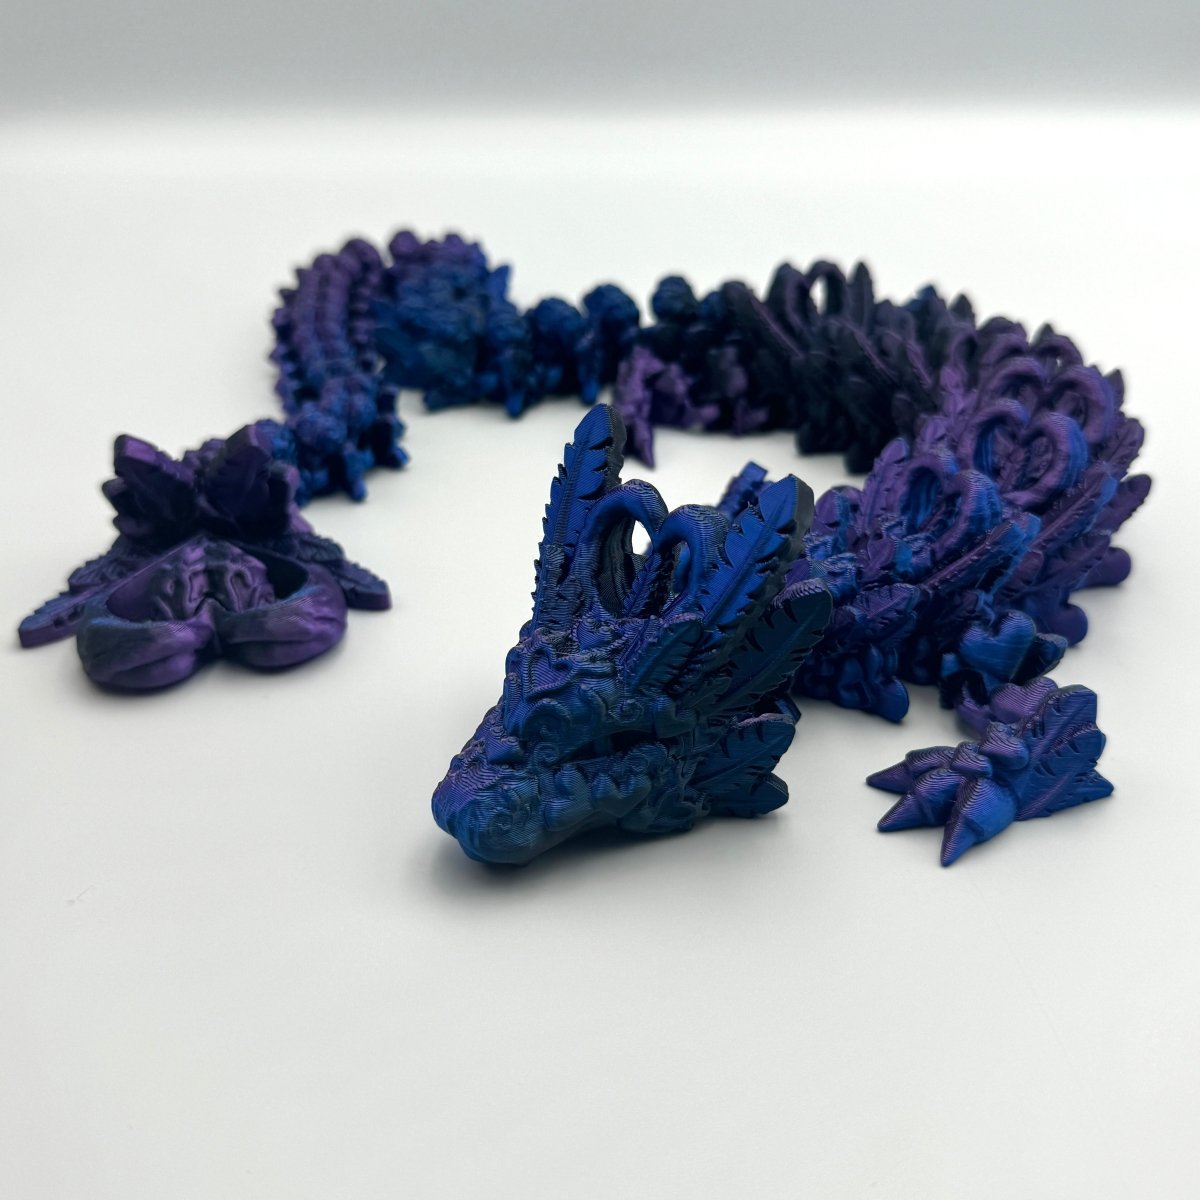 Dark Heart Dragon: 22" 3D Printed Articulated Dragon - Cosmic Chameleon